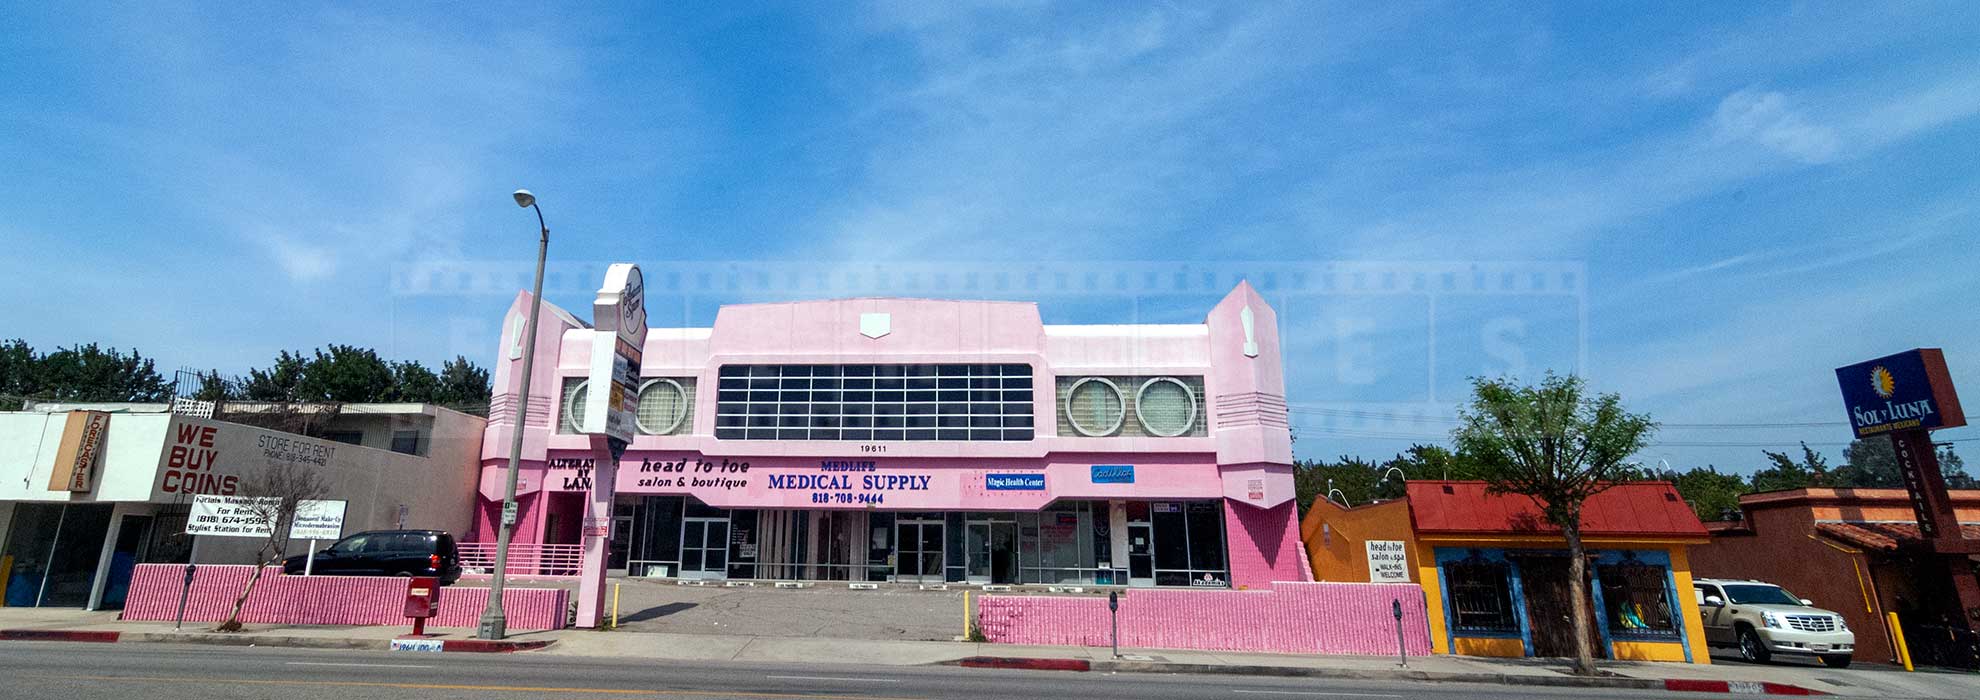 pink cadillac building in california